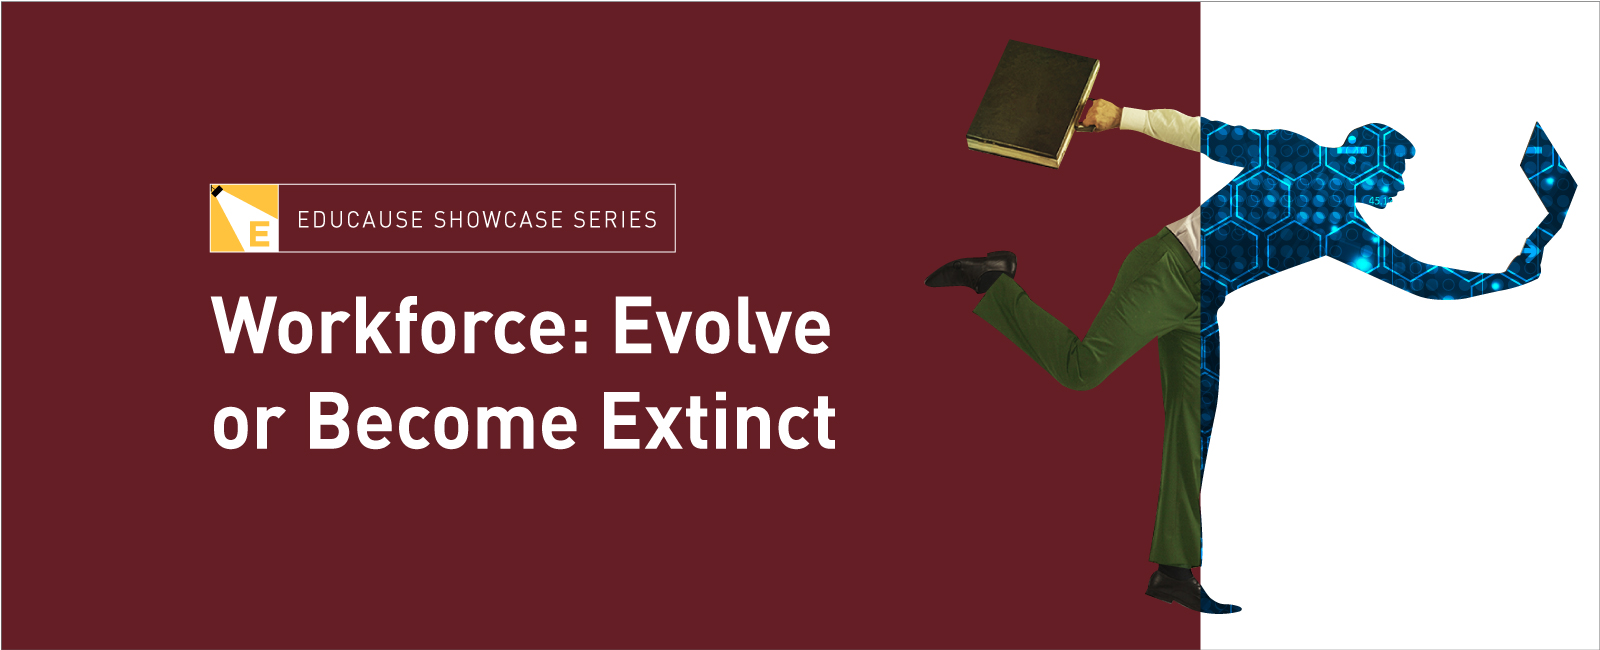 EDUCAUSE Showcase Series | Workforce: Evolve or Become Extinct